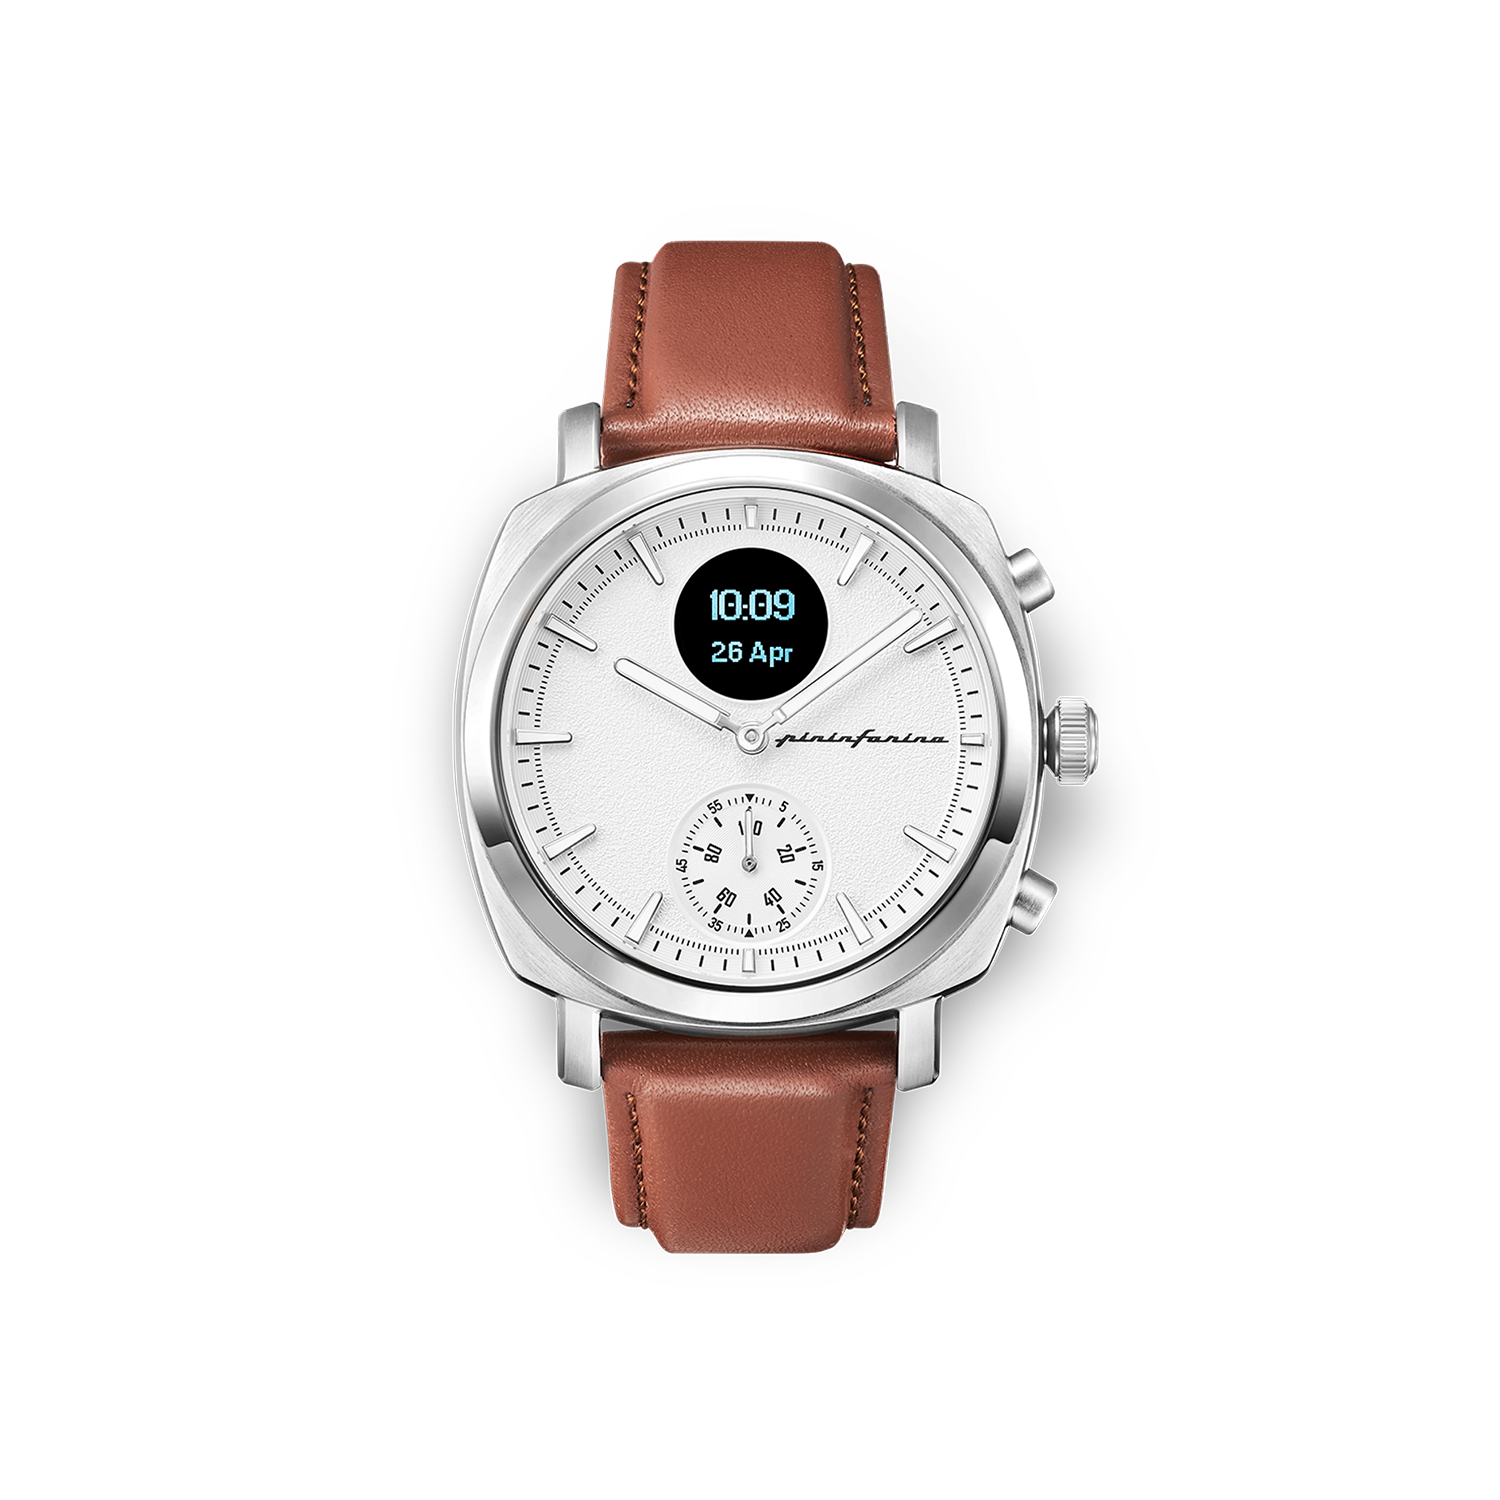 Fossil Q Machine Hybrid Watch Review | Gadgets 360-nextbuild.com.vn